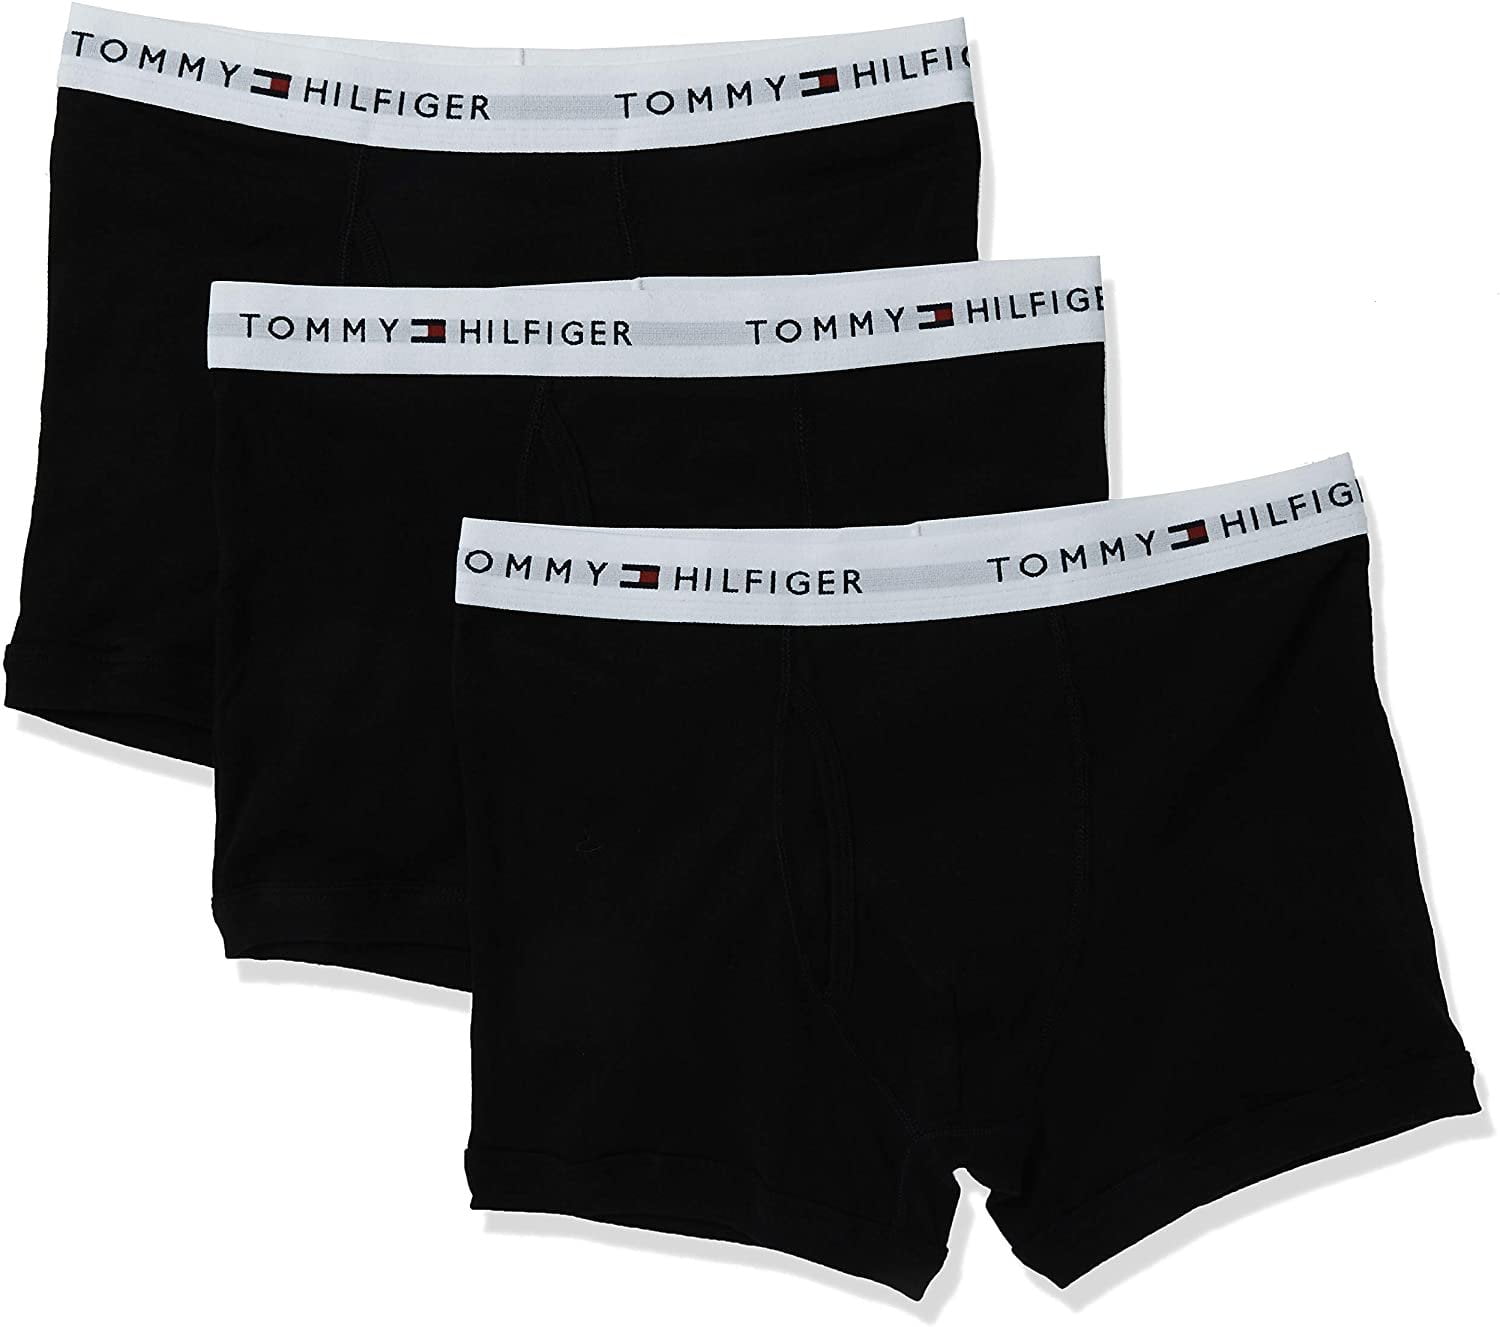 Tommy Hilfiger Men's Underwear Multipack Cotton Classics Trunks Black M